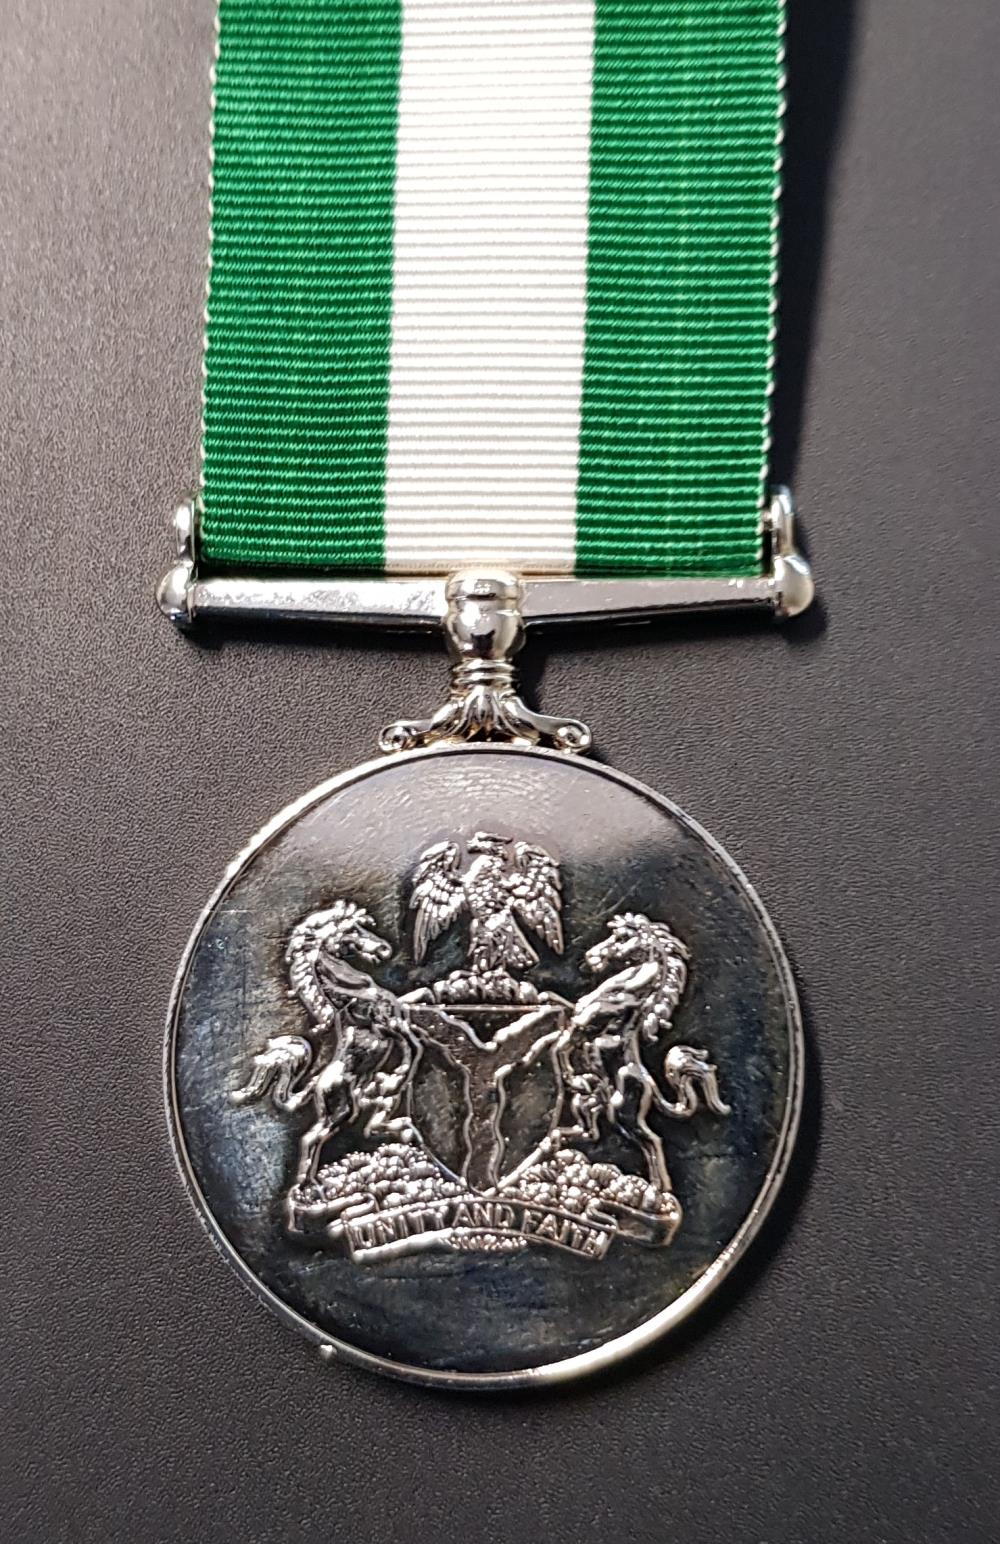 Nigeria - Independence Medal 1960